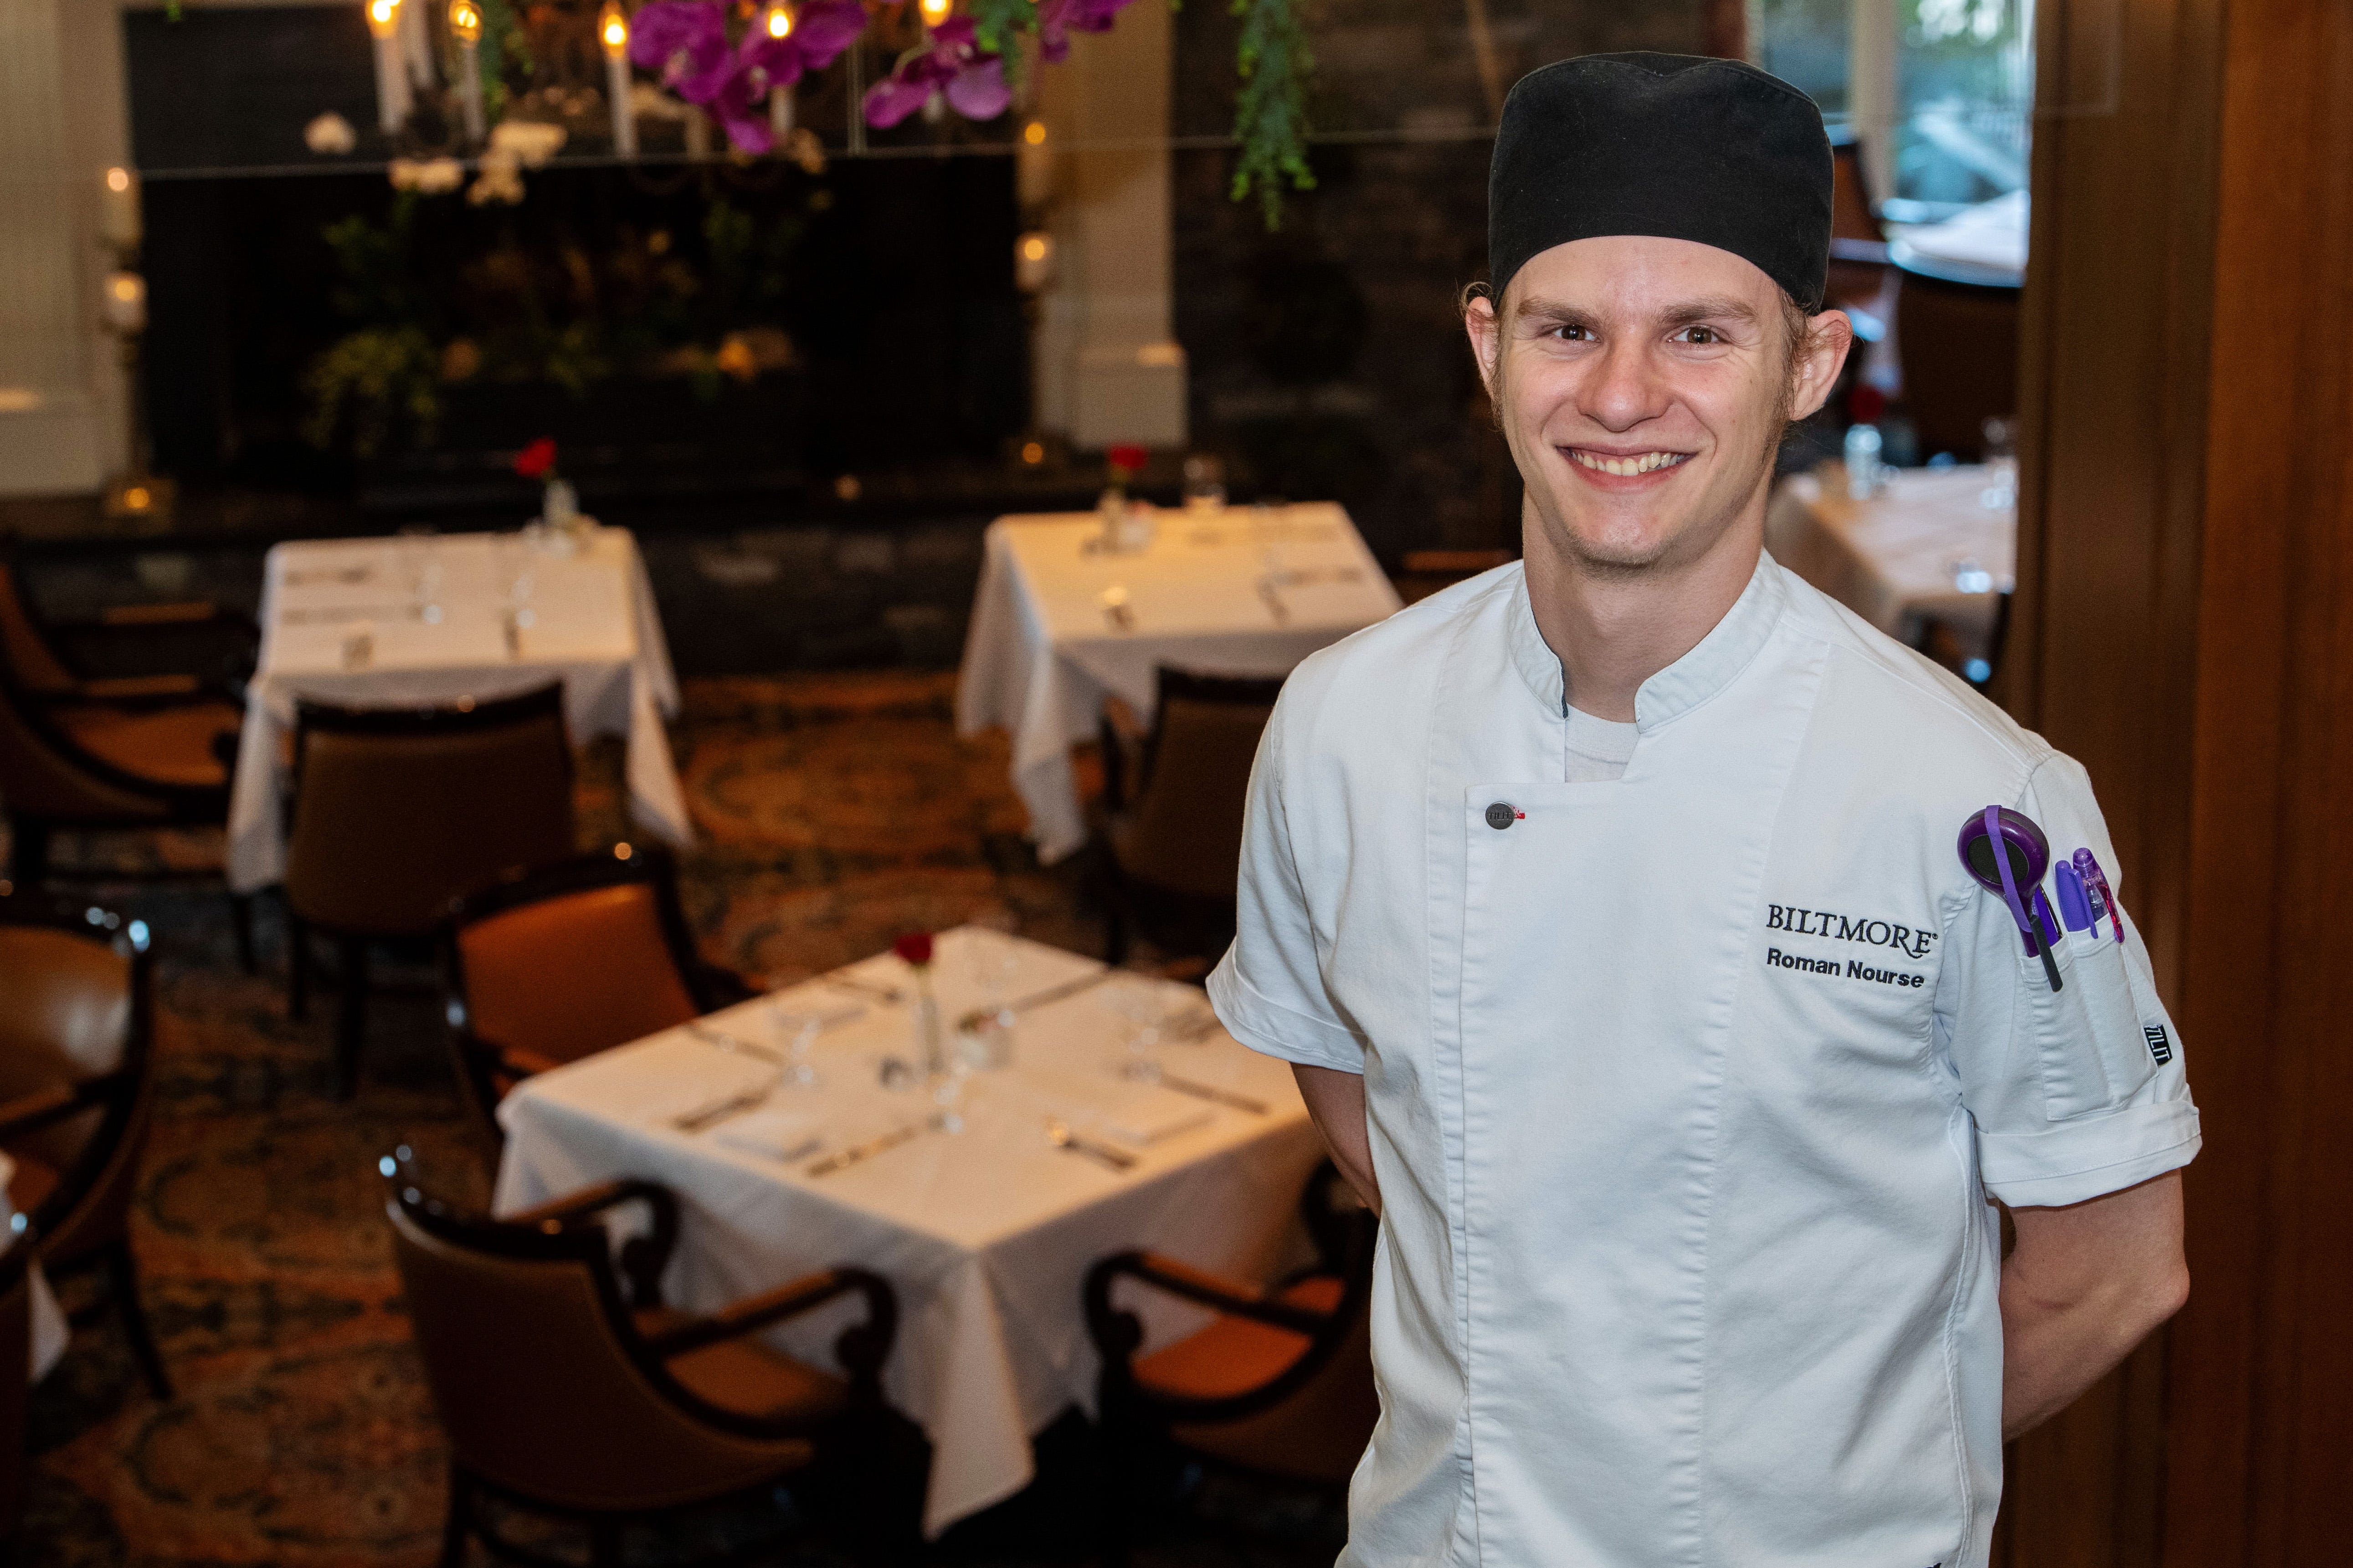 Biltmore Estate chef wins prestigious cooking competition, will represent US in Thailand